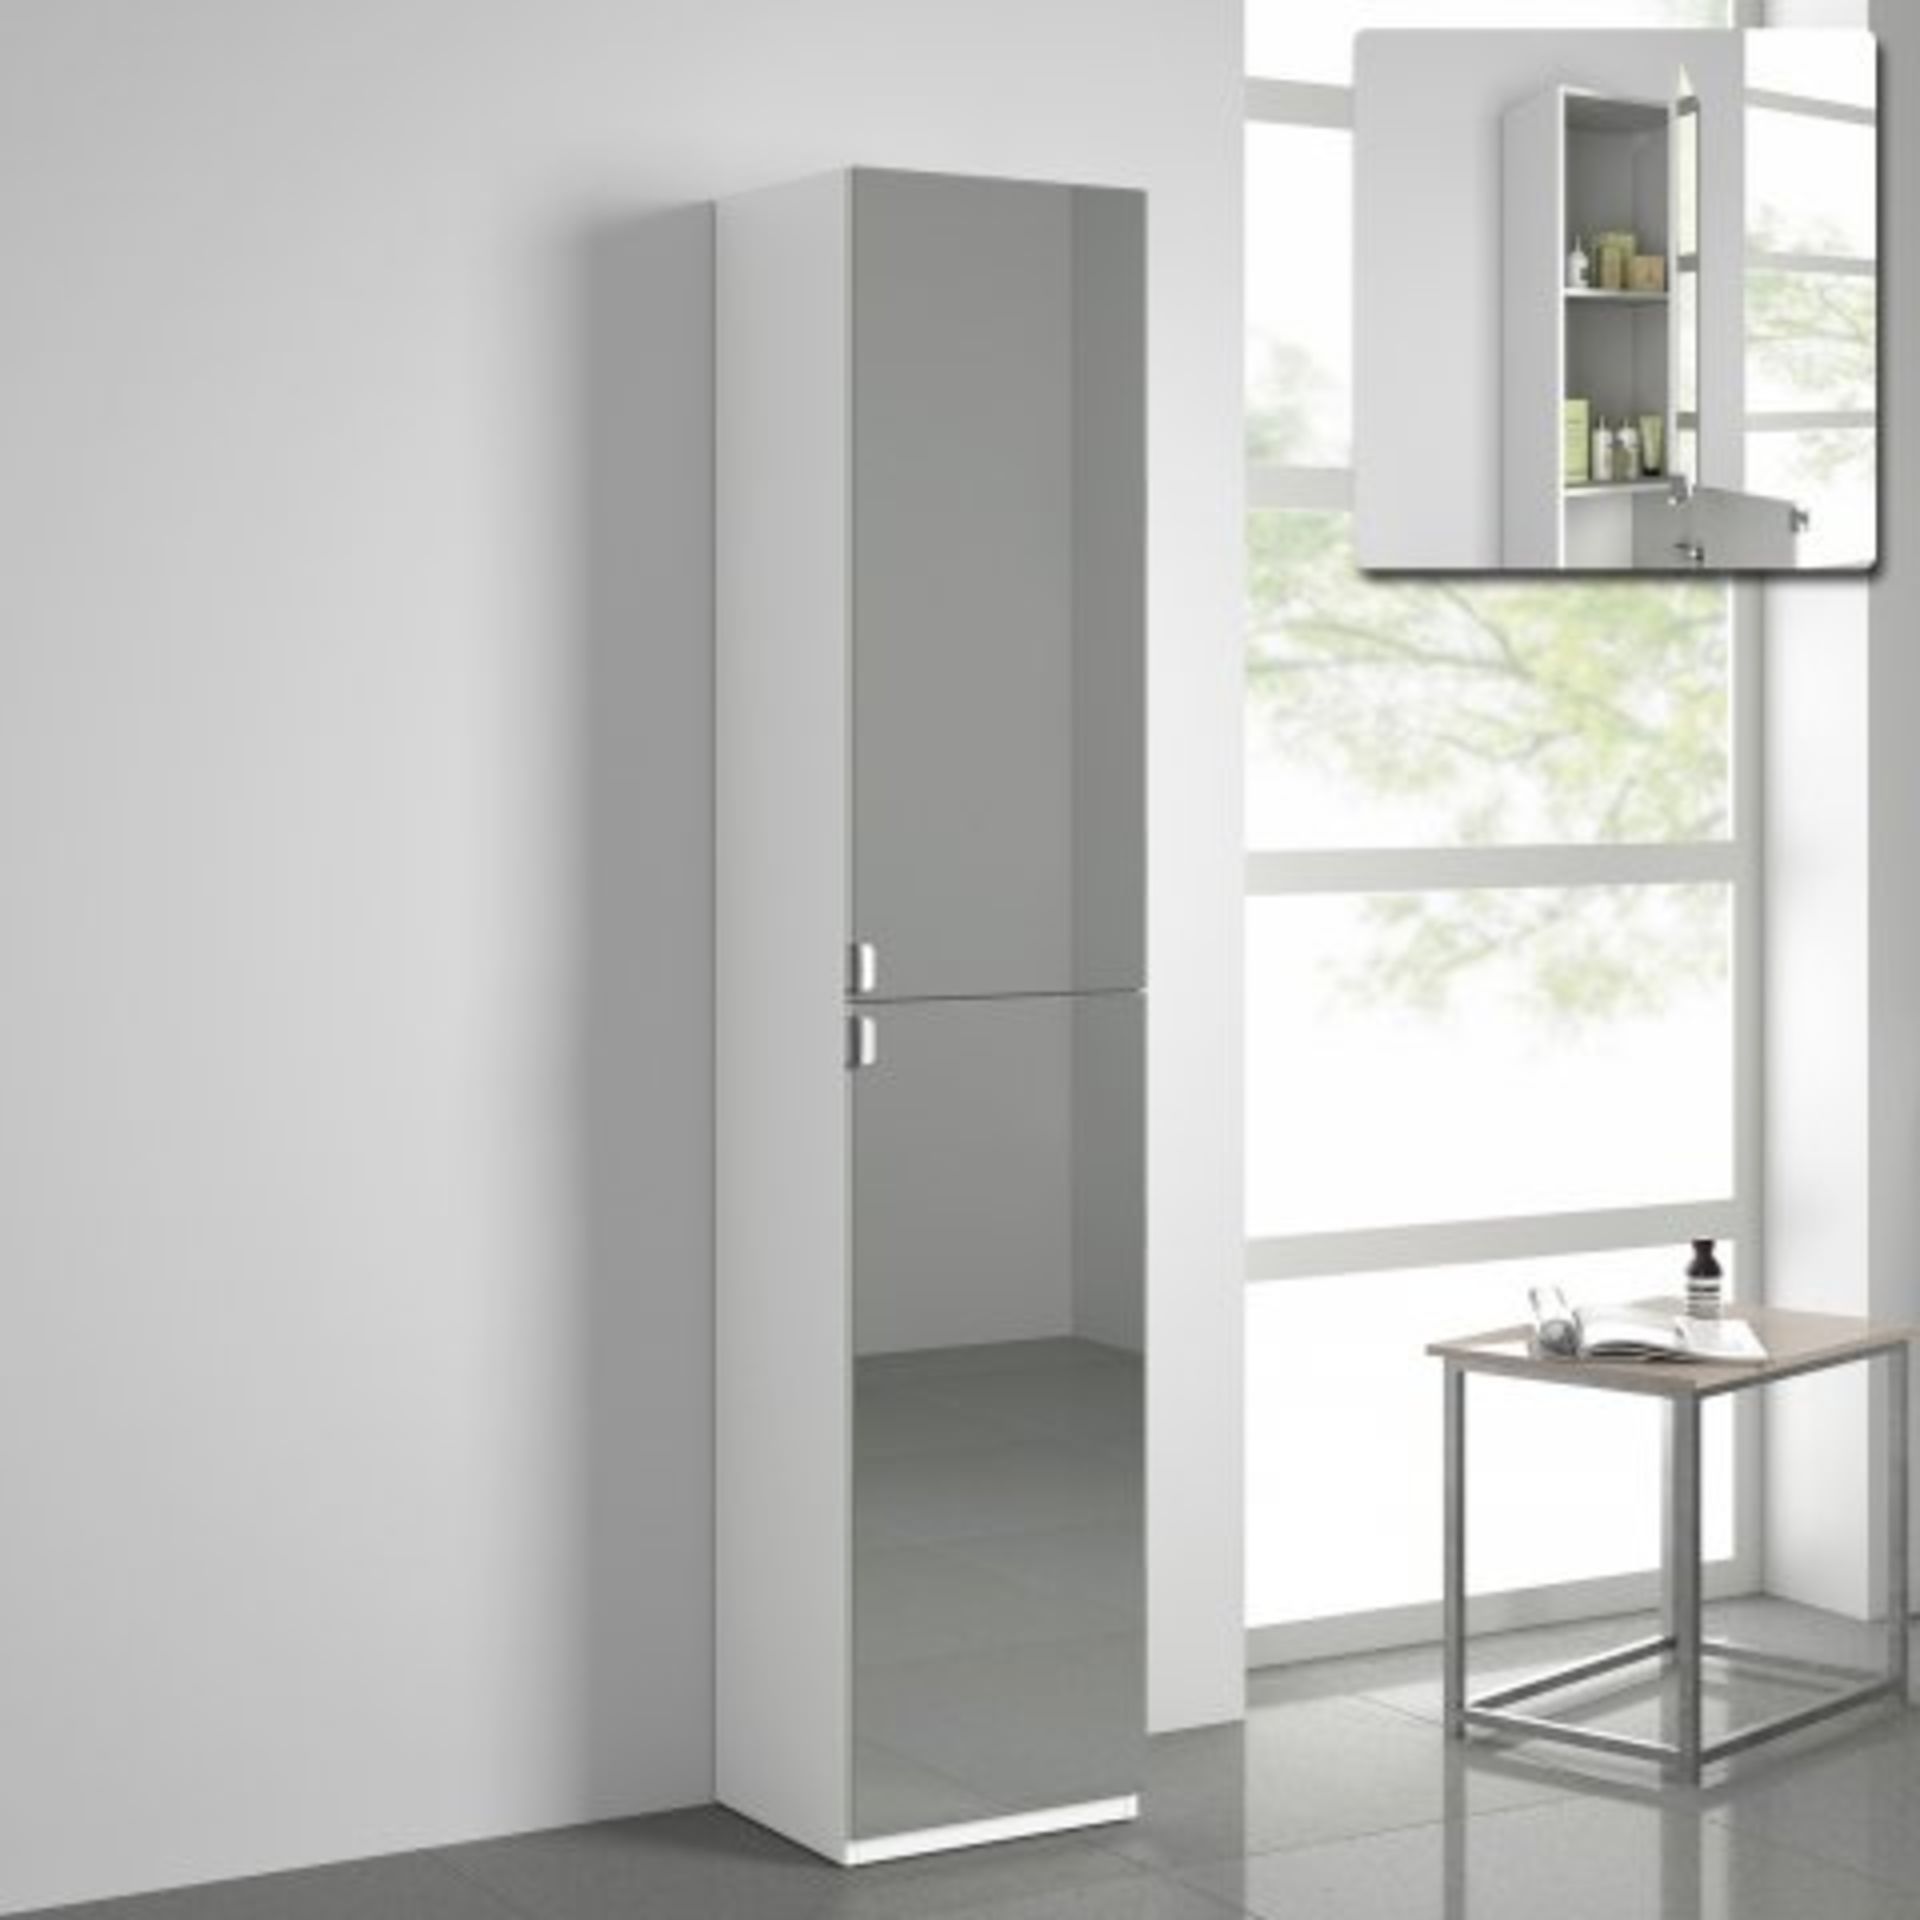 (K27) 1700x350mm Mirrored Door Matte White Tall Storage Cabinet - Floor Standing. RRP £339.99.